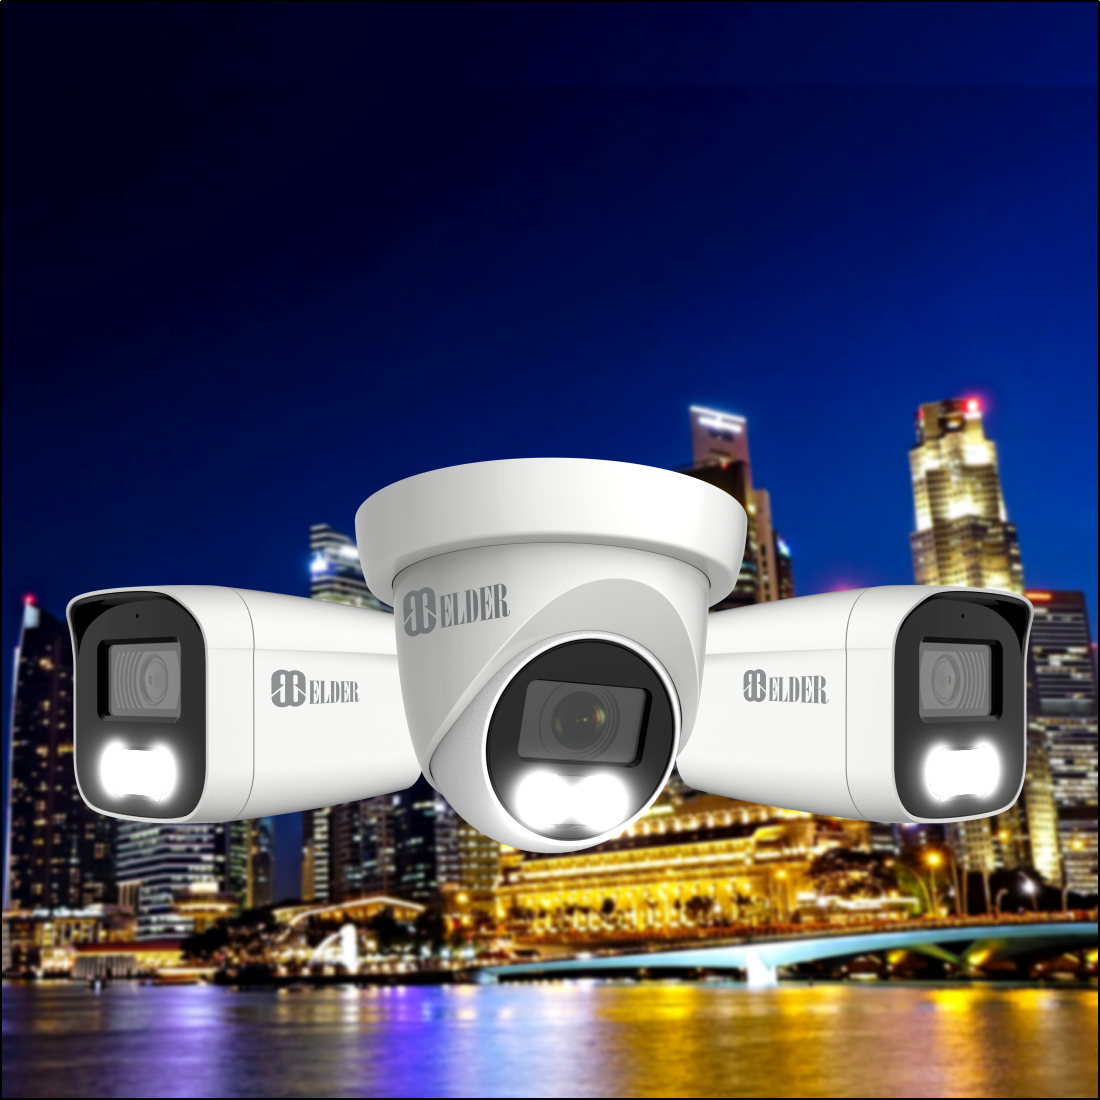 Spotlight security cameras color night vision surveillance systems nocturnal.